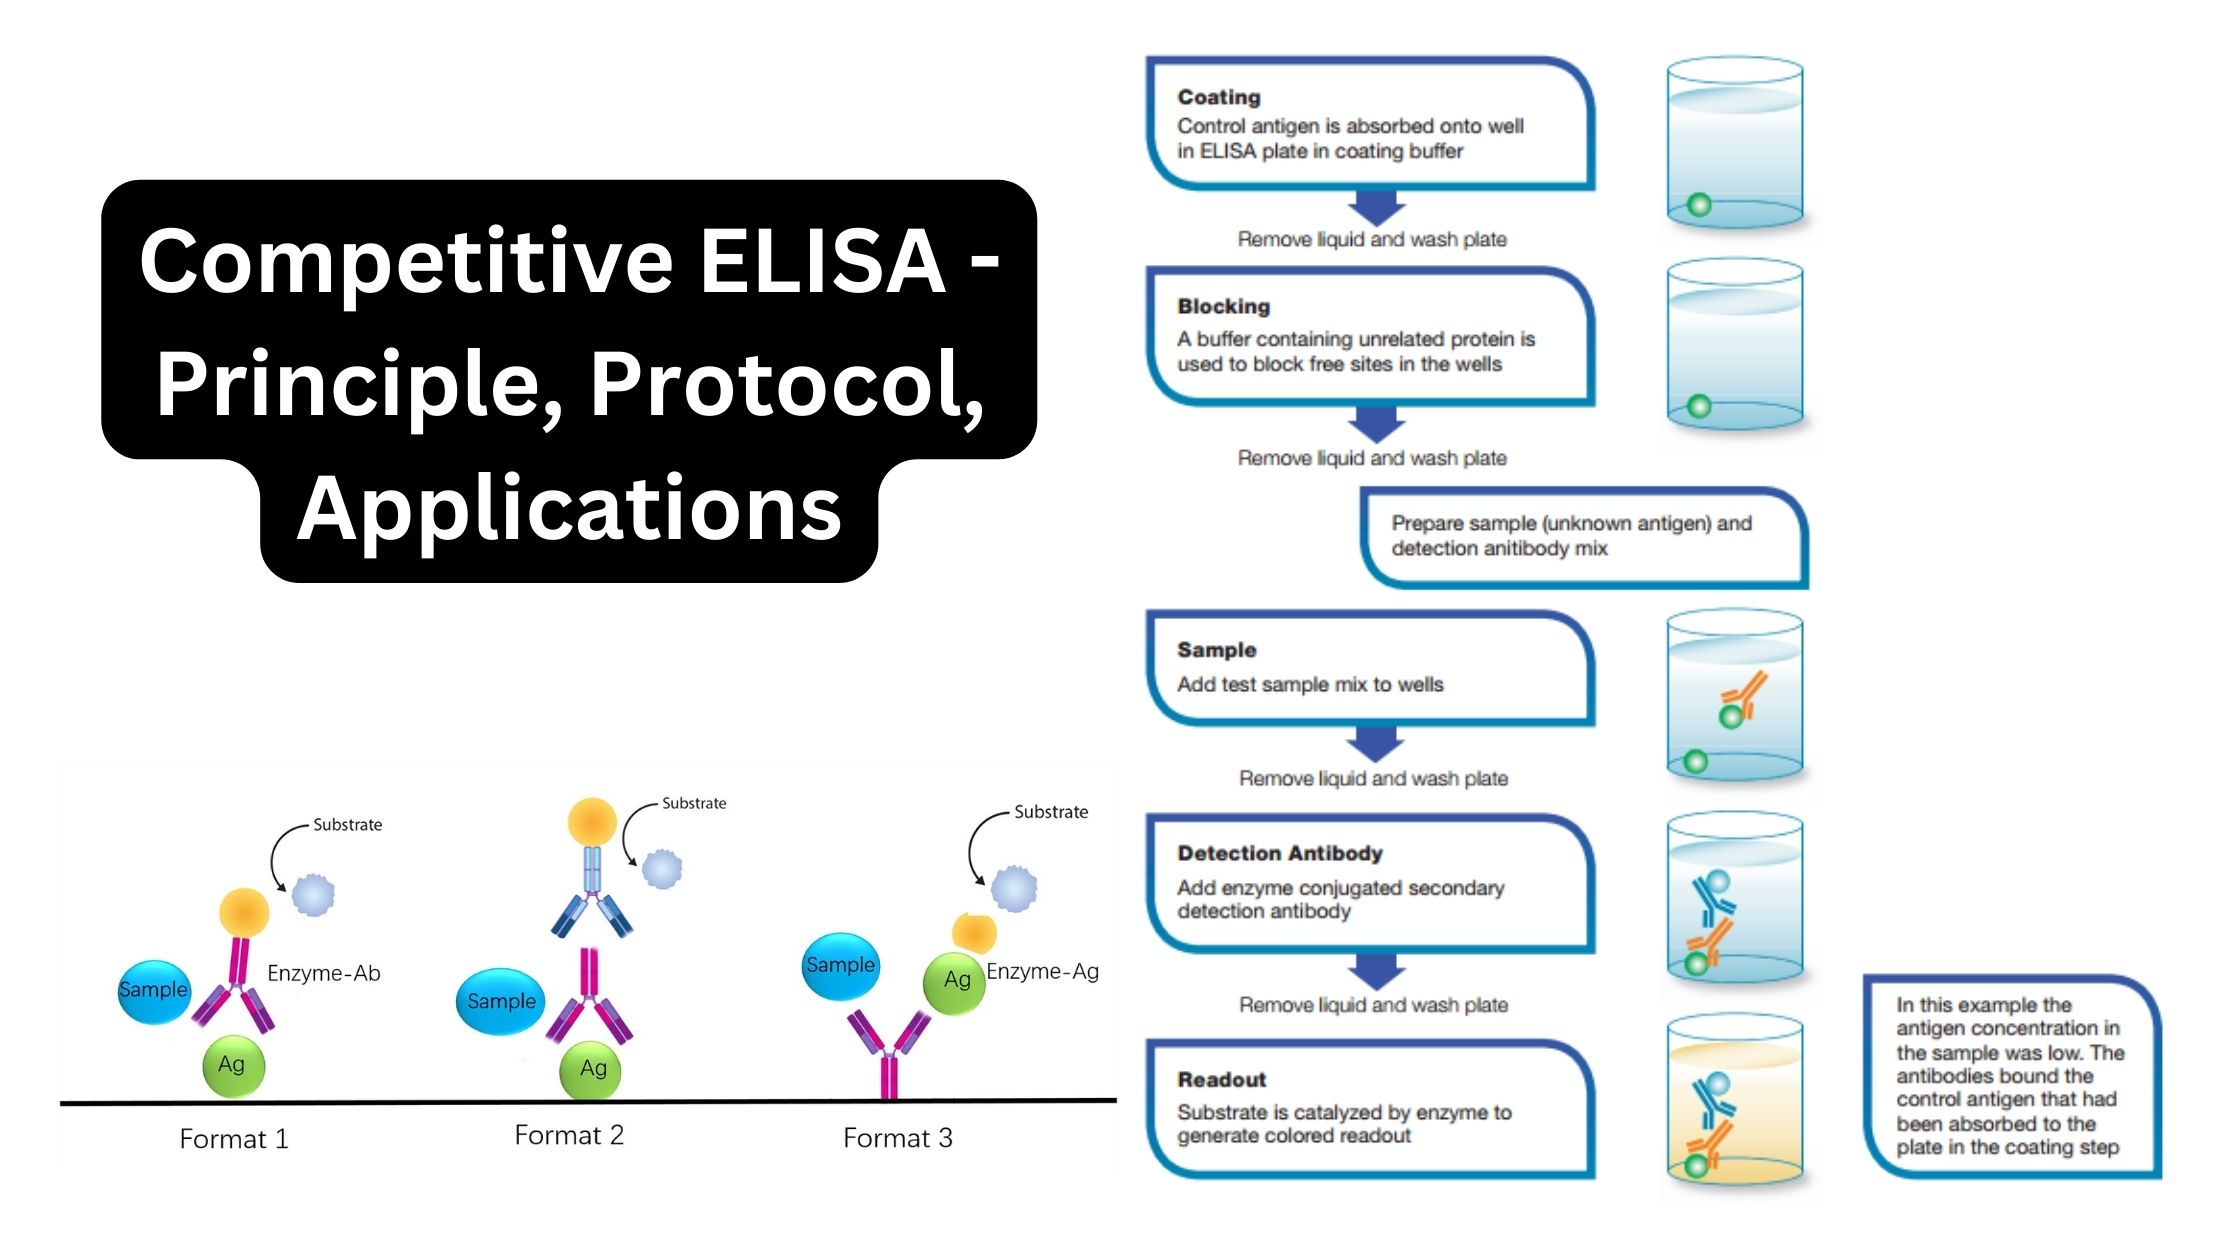 Competitive ELISA - Principle, Protocol, Applications